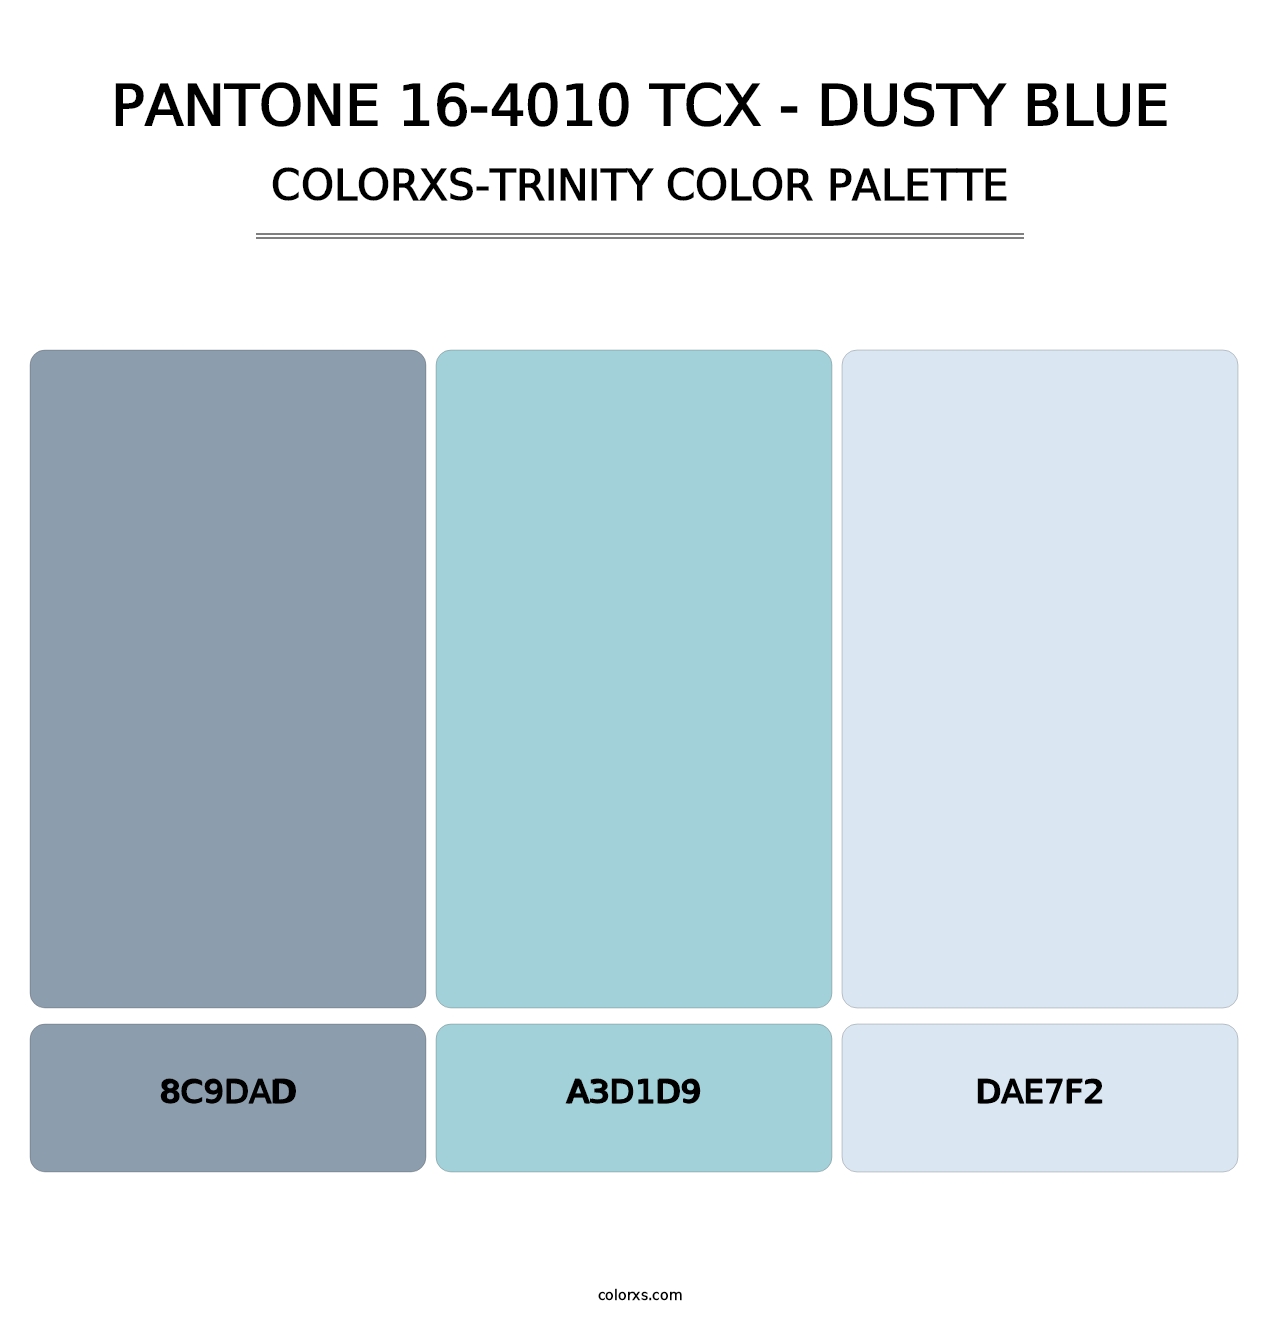 PANTONE 16-4010 TCX - Dusty Blue - Colorxs Trinity Palette